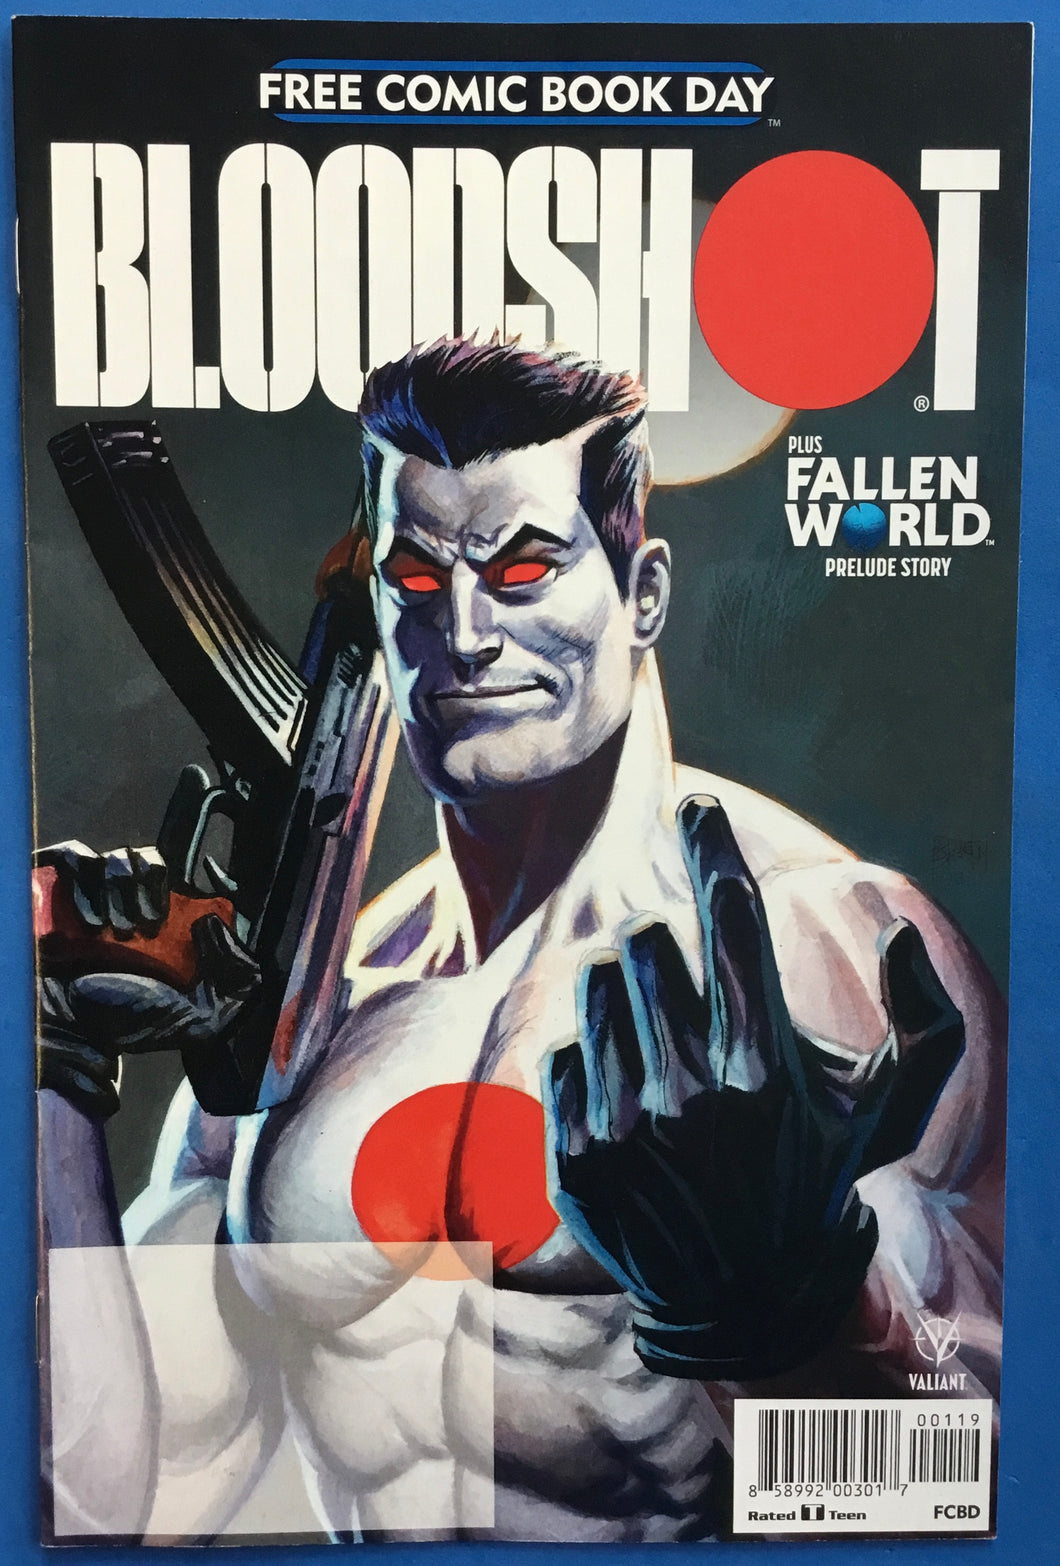 Bloodshot FCBD 2019 Valiant Comics